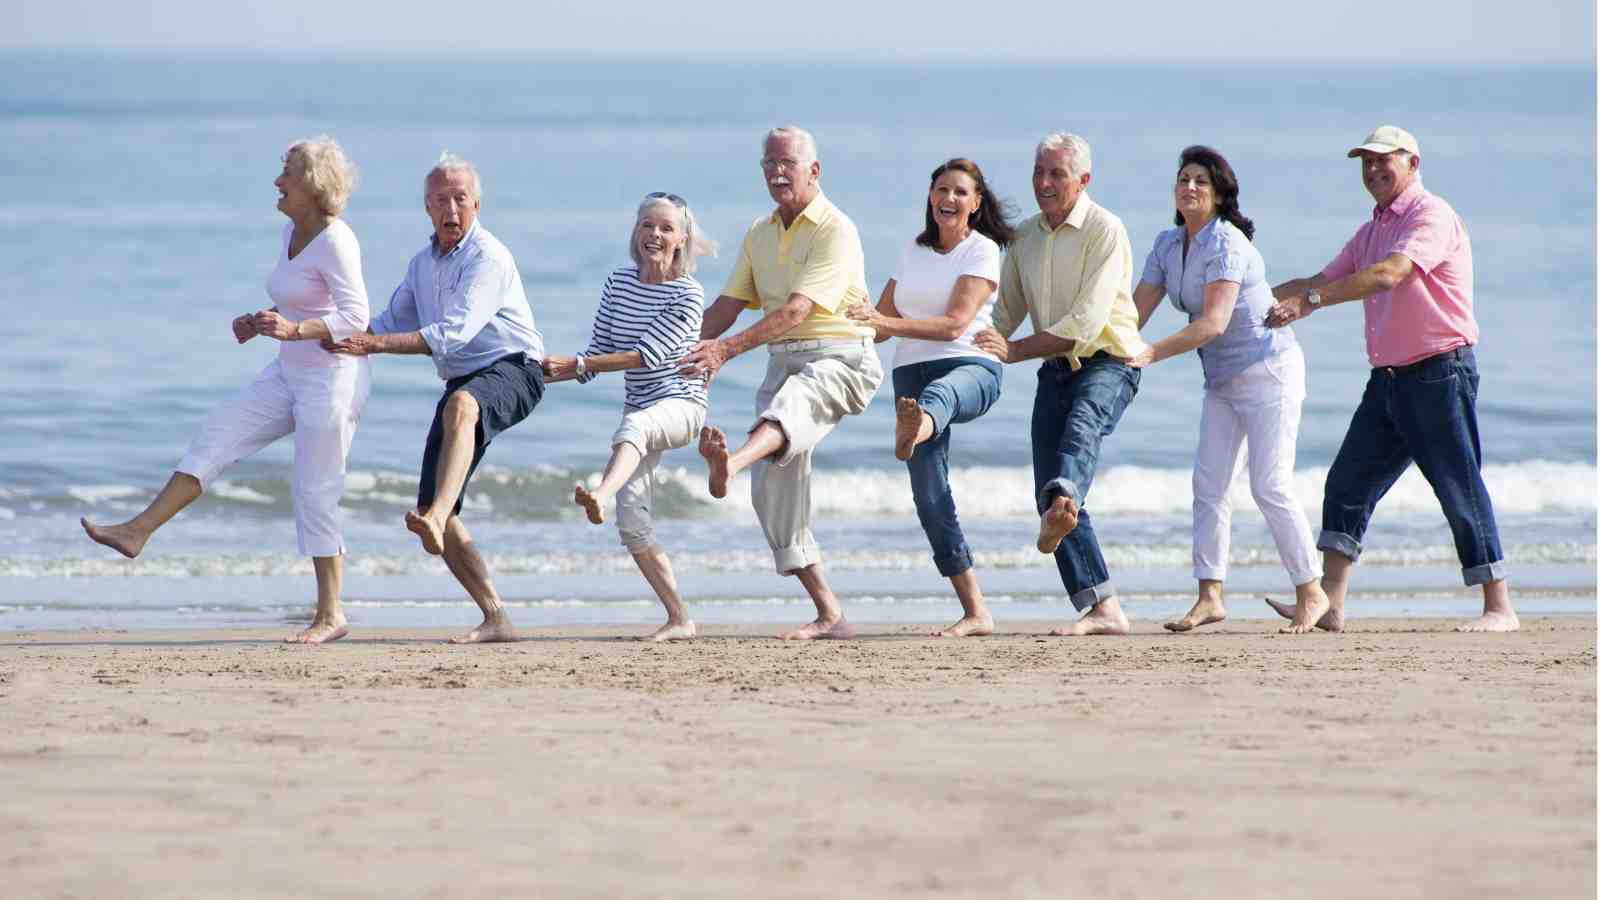 People dancing on a beach